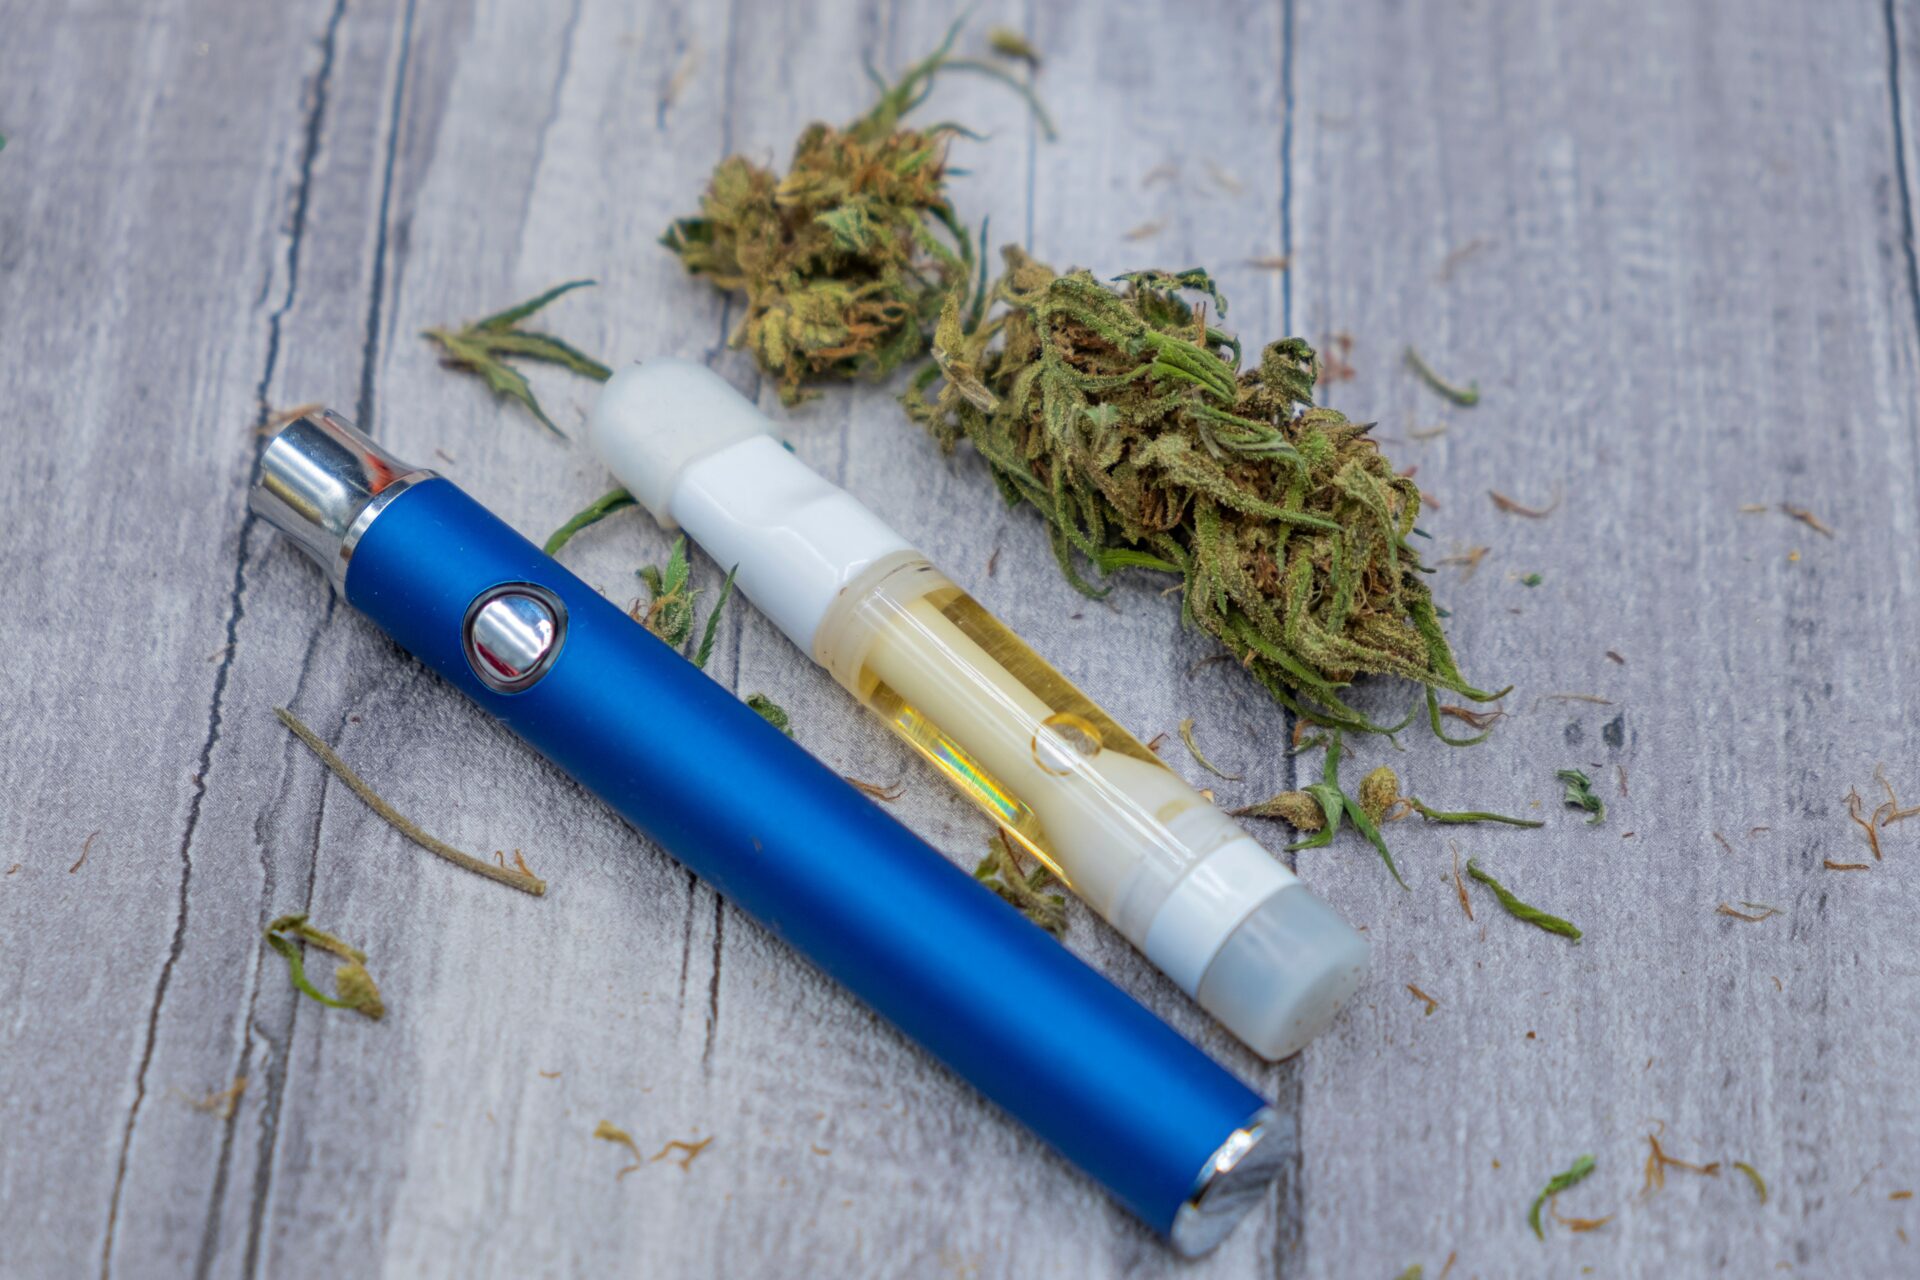 CDB. Cannabis oil extract In Vape pen cartridge and marijuana buds